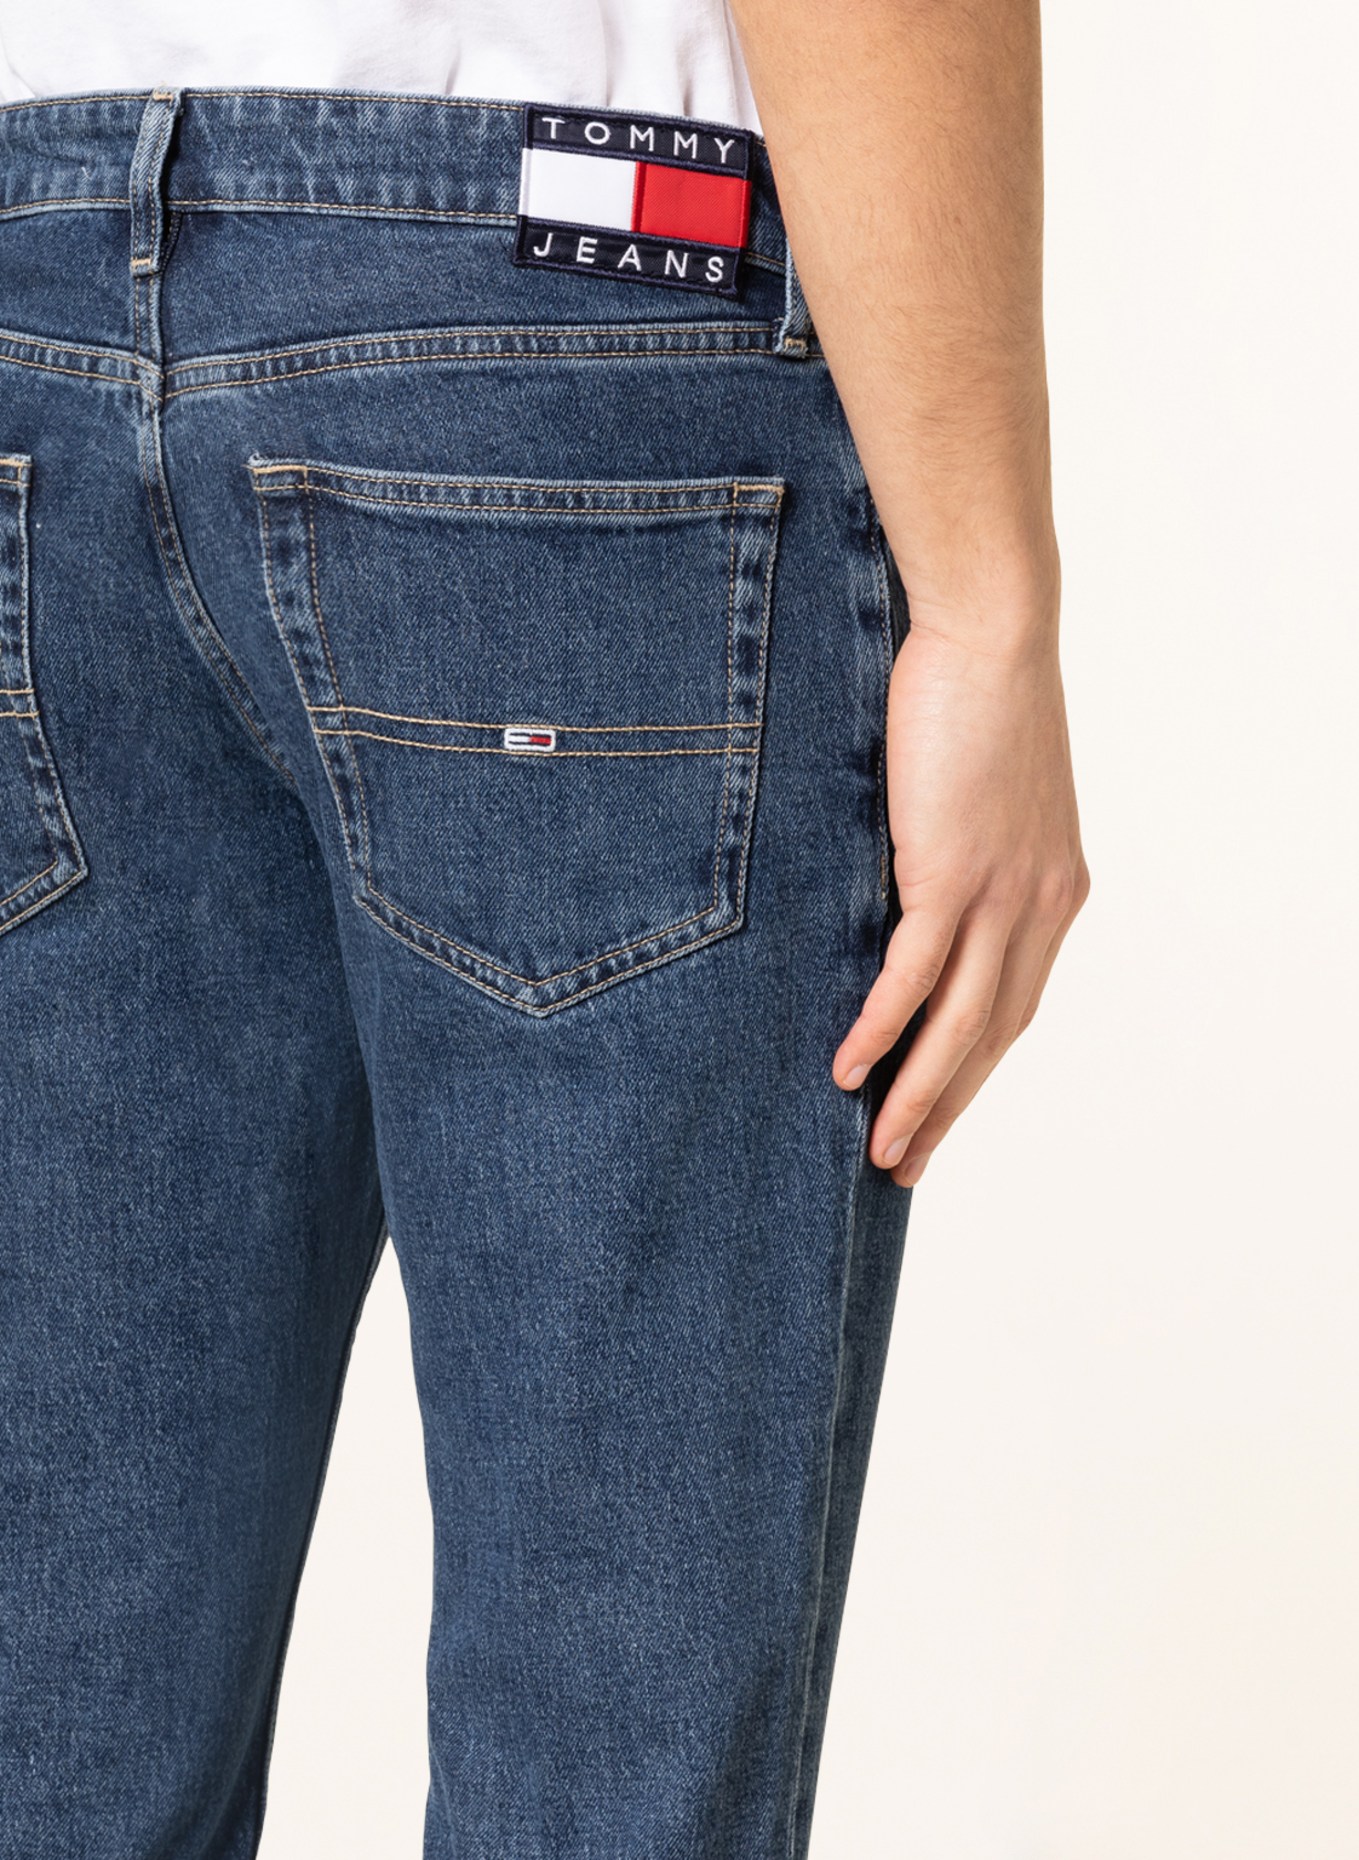 TOMMY JEANS Jeans SCANTON Slim Fit, Farbe: 1A5 Denim Medium (Bild 5)